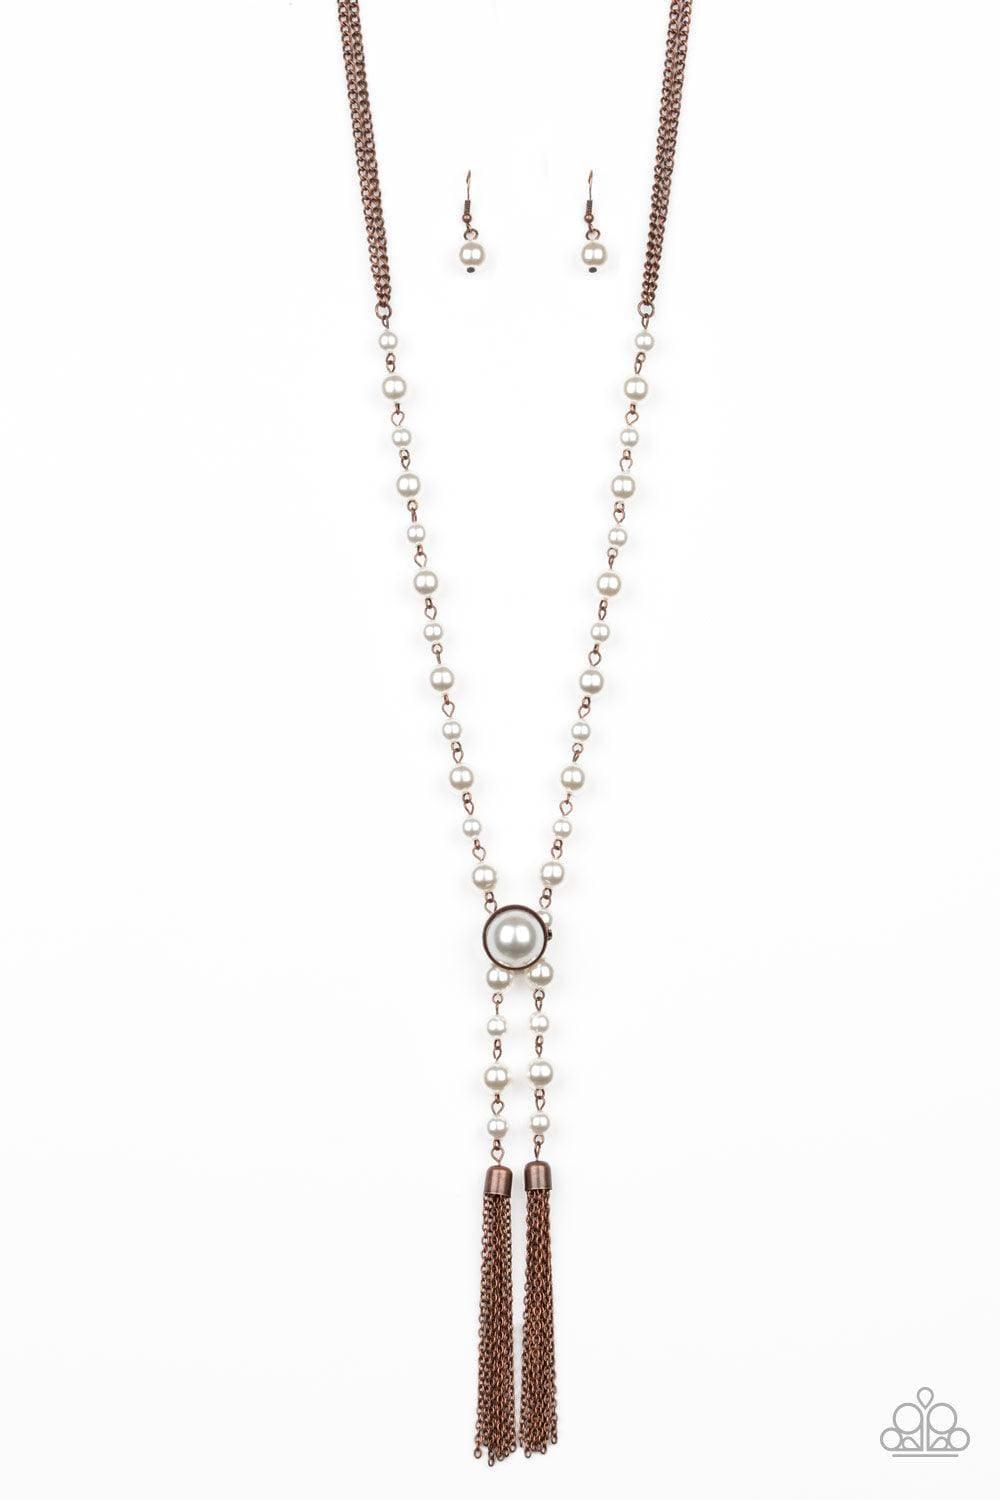 Paparazzi Accessories - Vintage Diva - Copper Necklace - Bling by JessieK